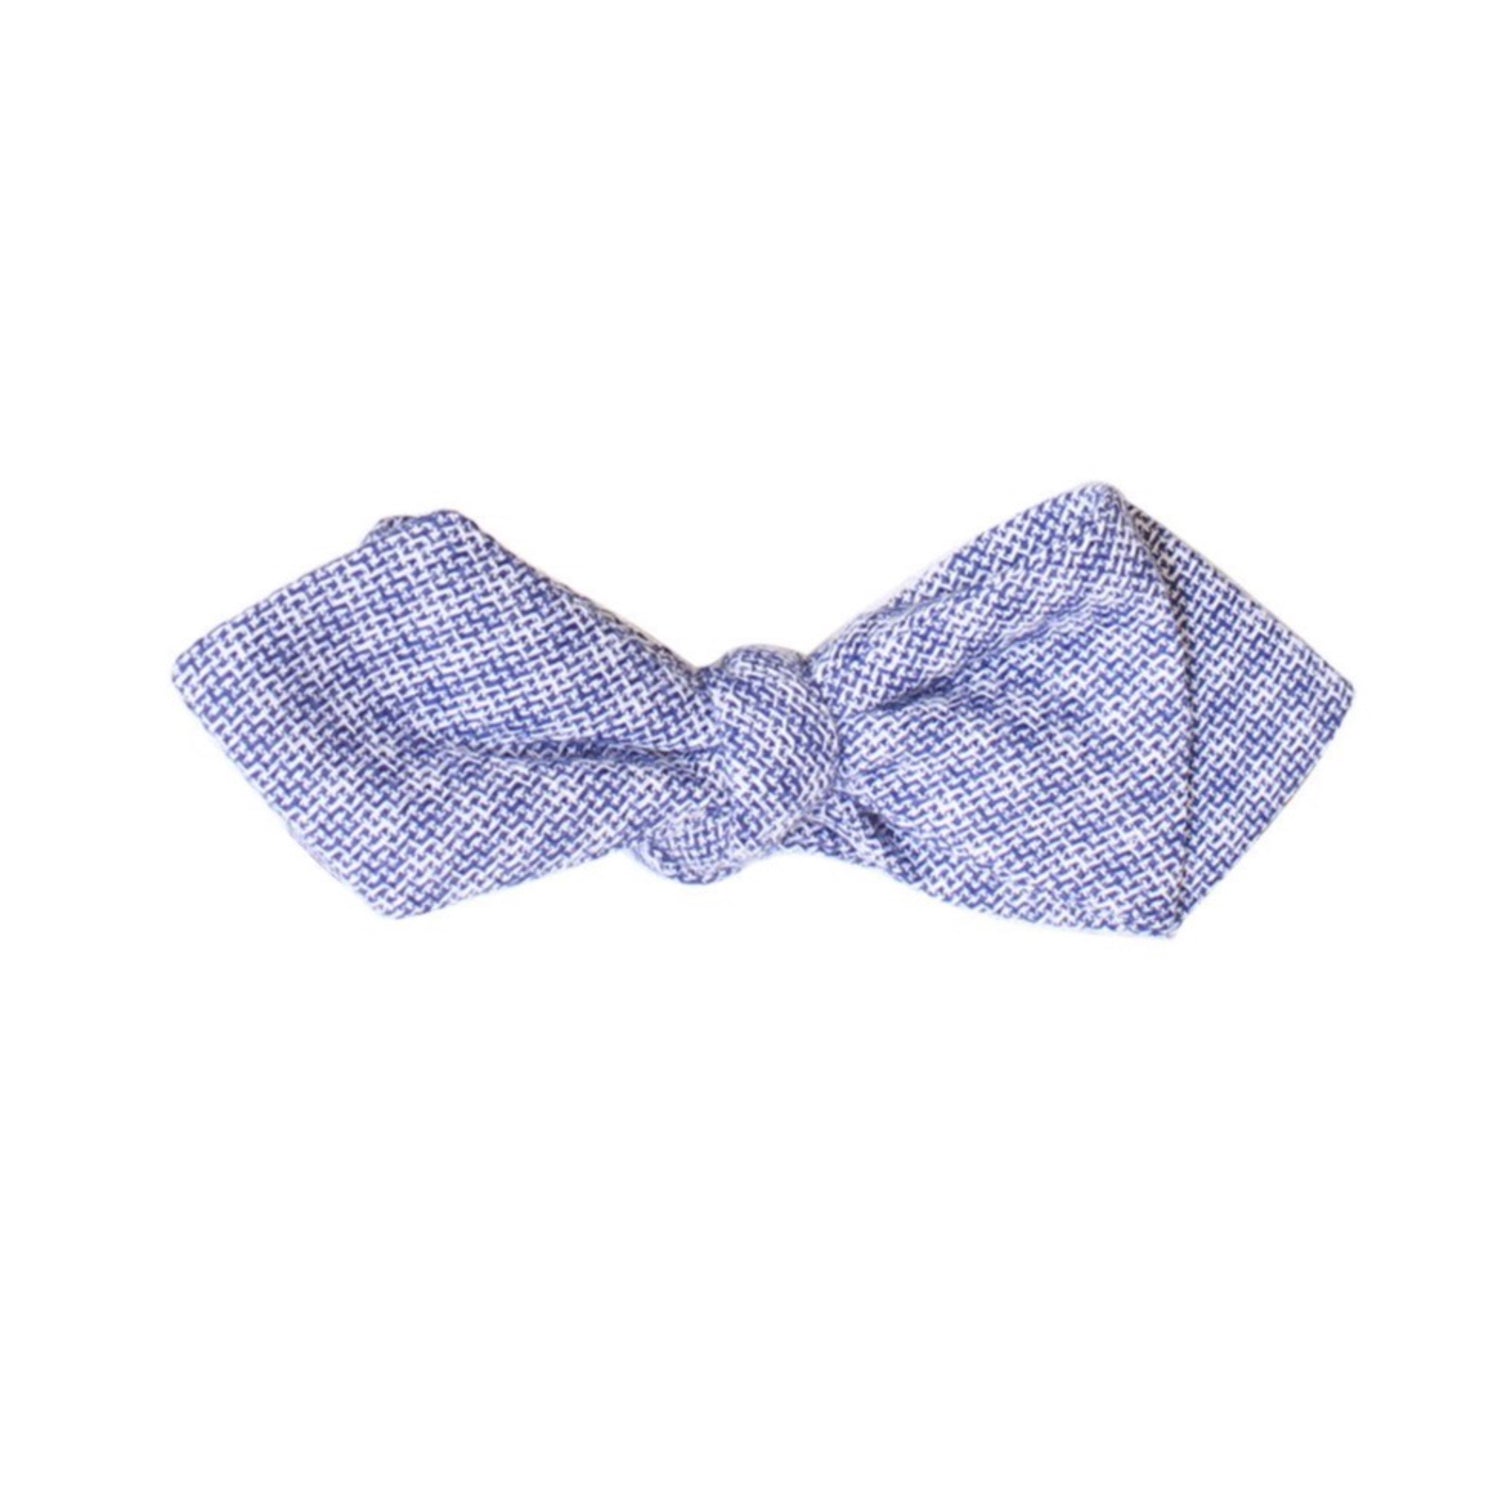 Dusty Blue cotton Plaid Diamond Tip self tie bow tie by German Valdivia 